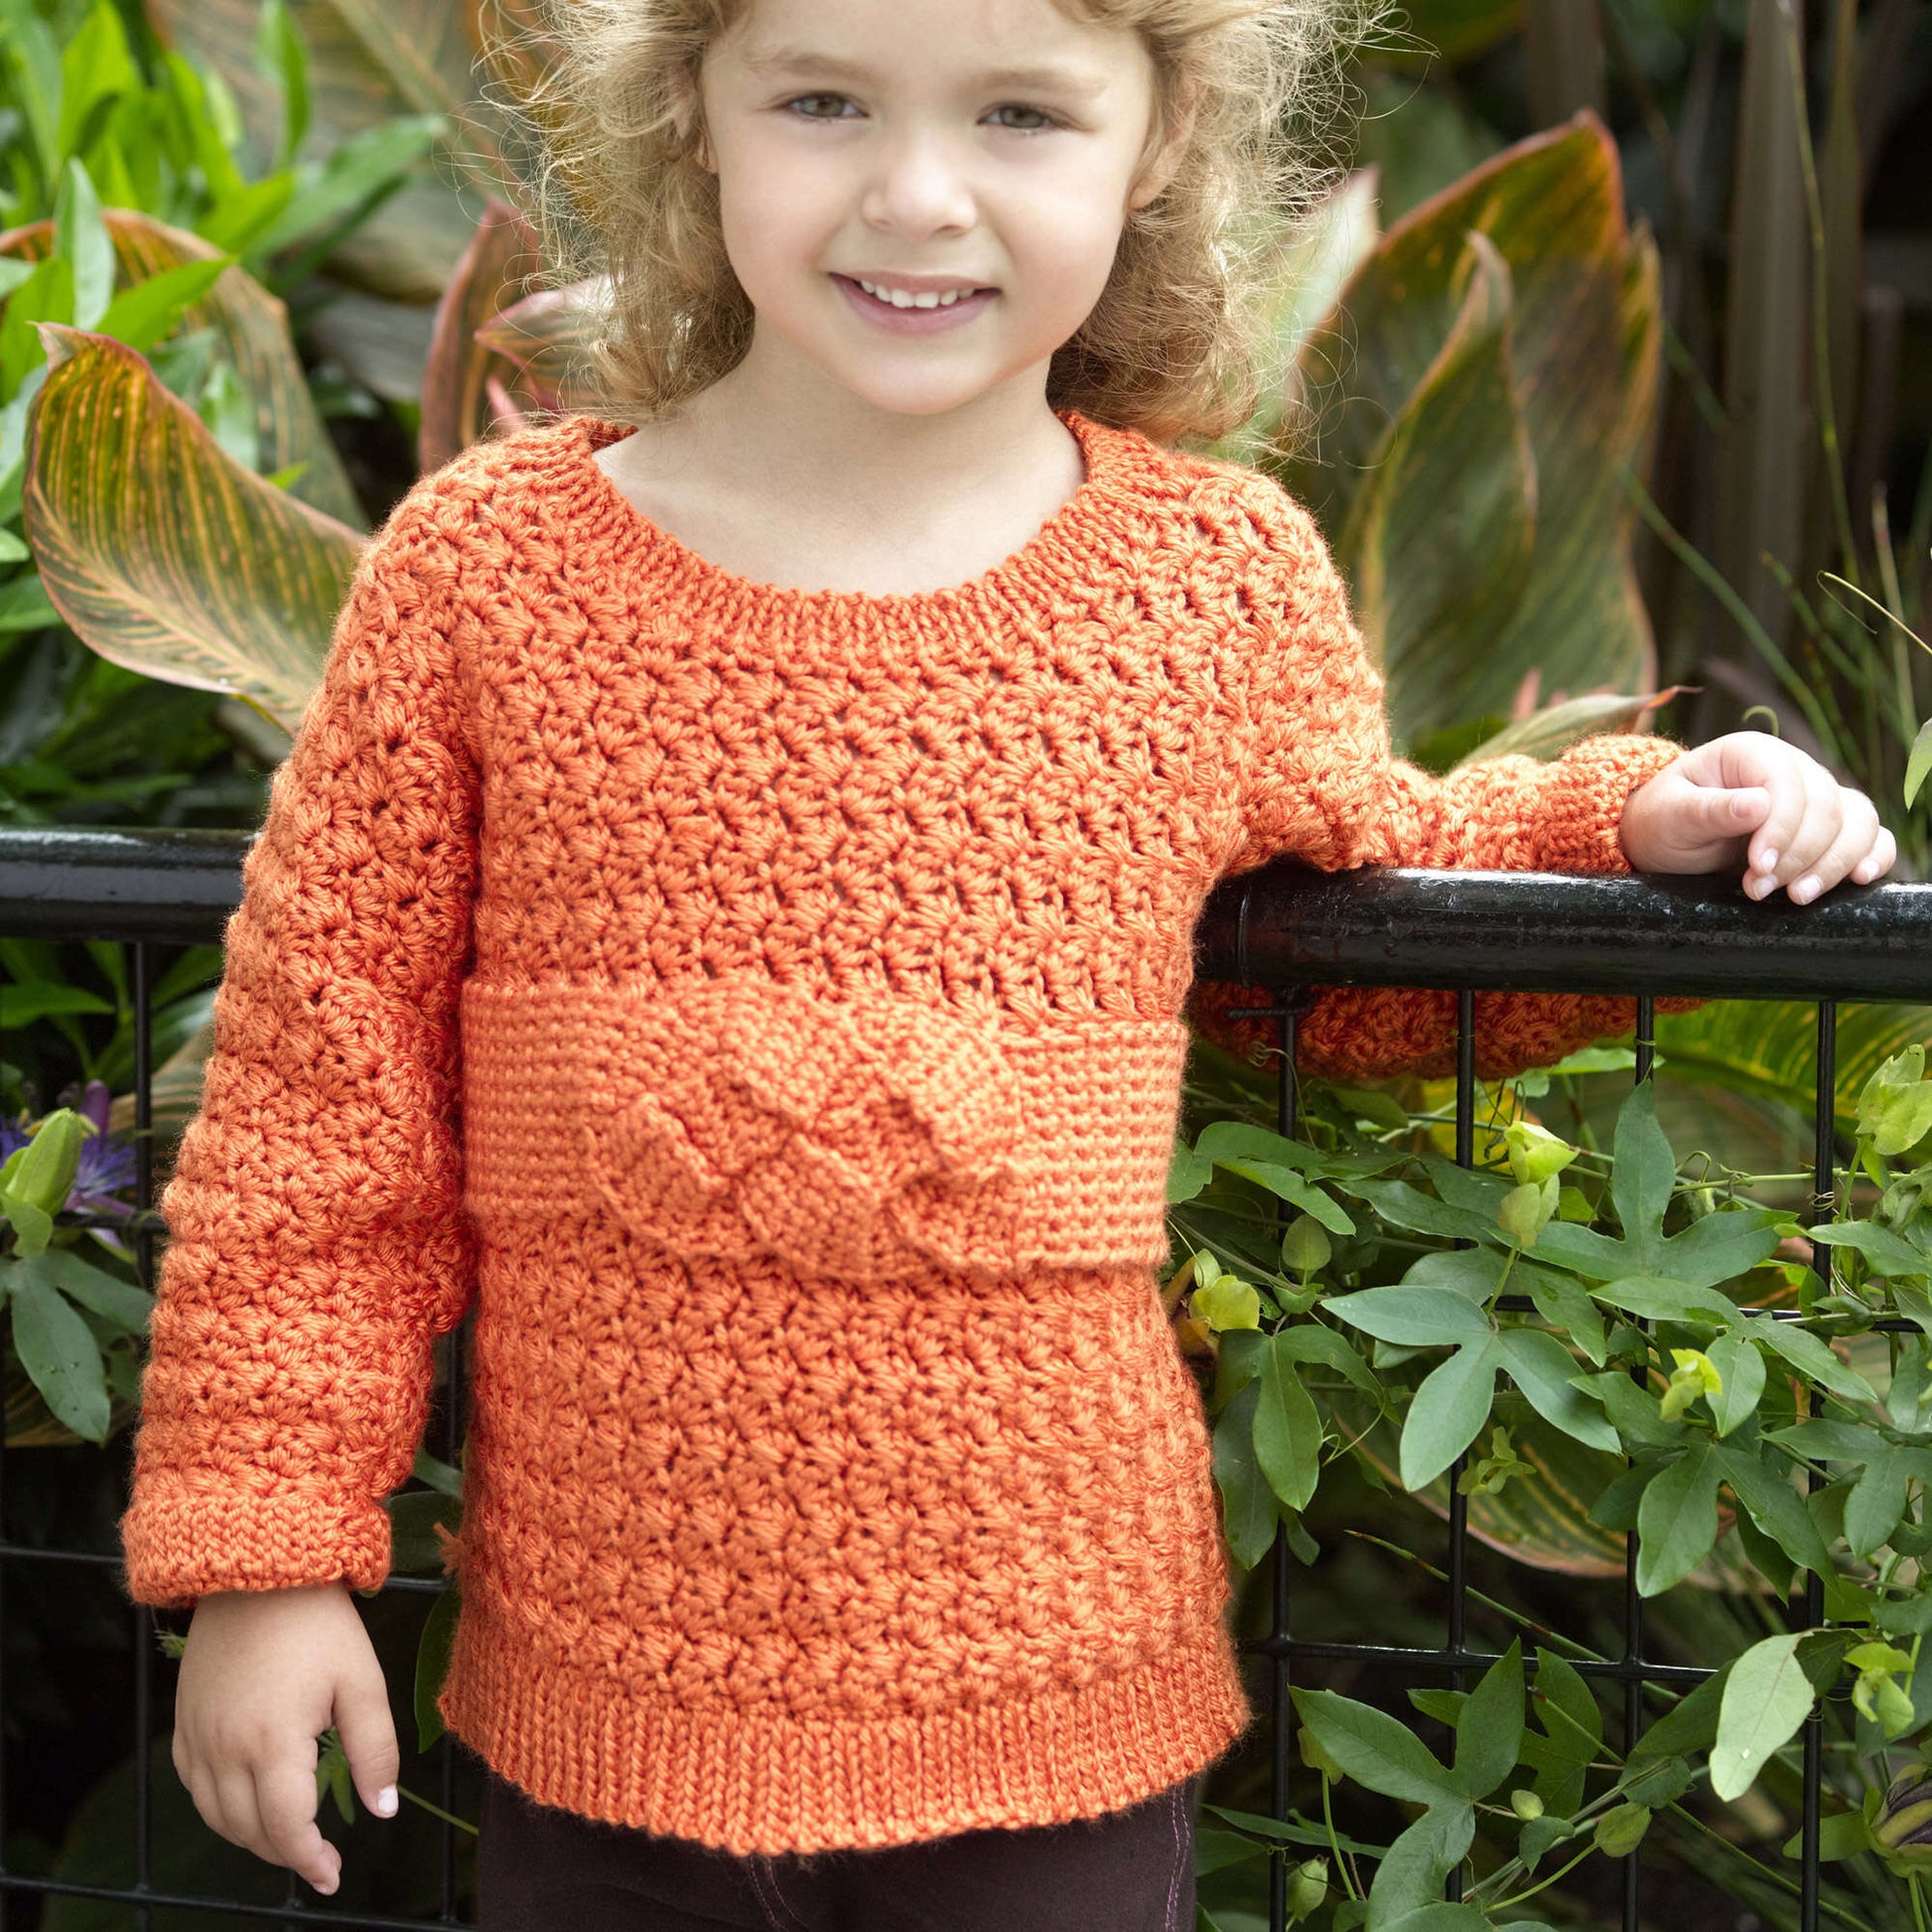 Free Red Heart Crochet Child's Friendship Knot Sweater Pattern